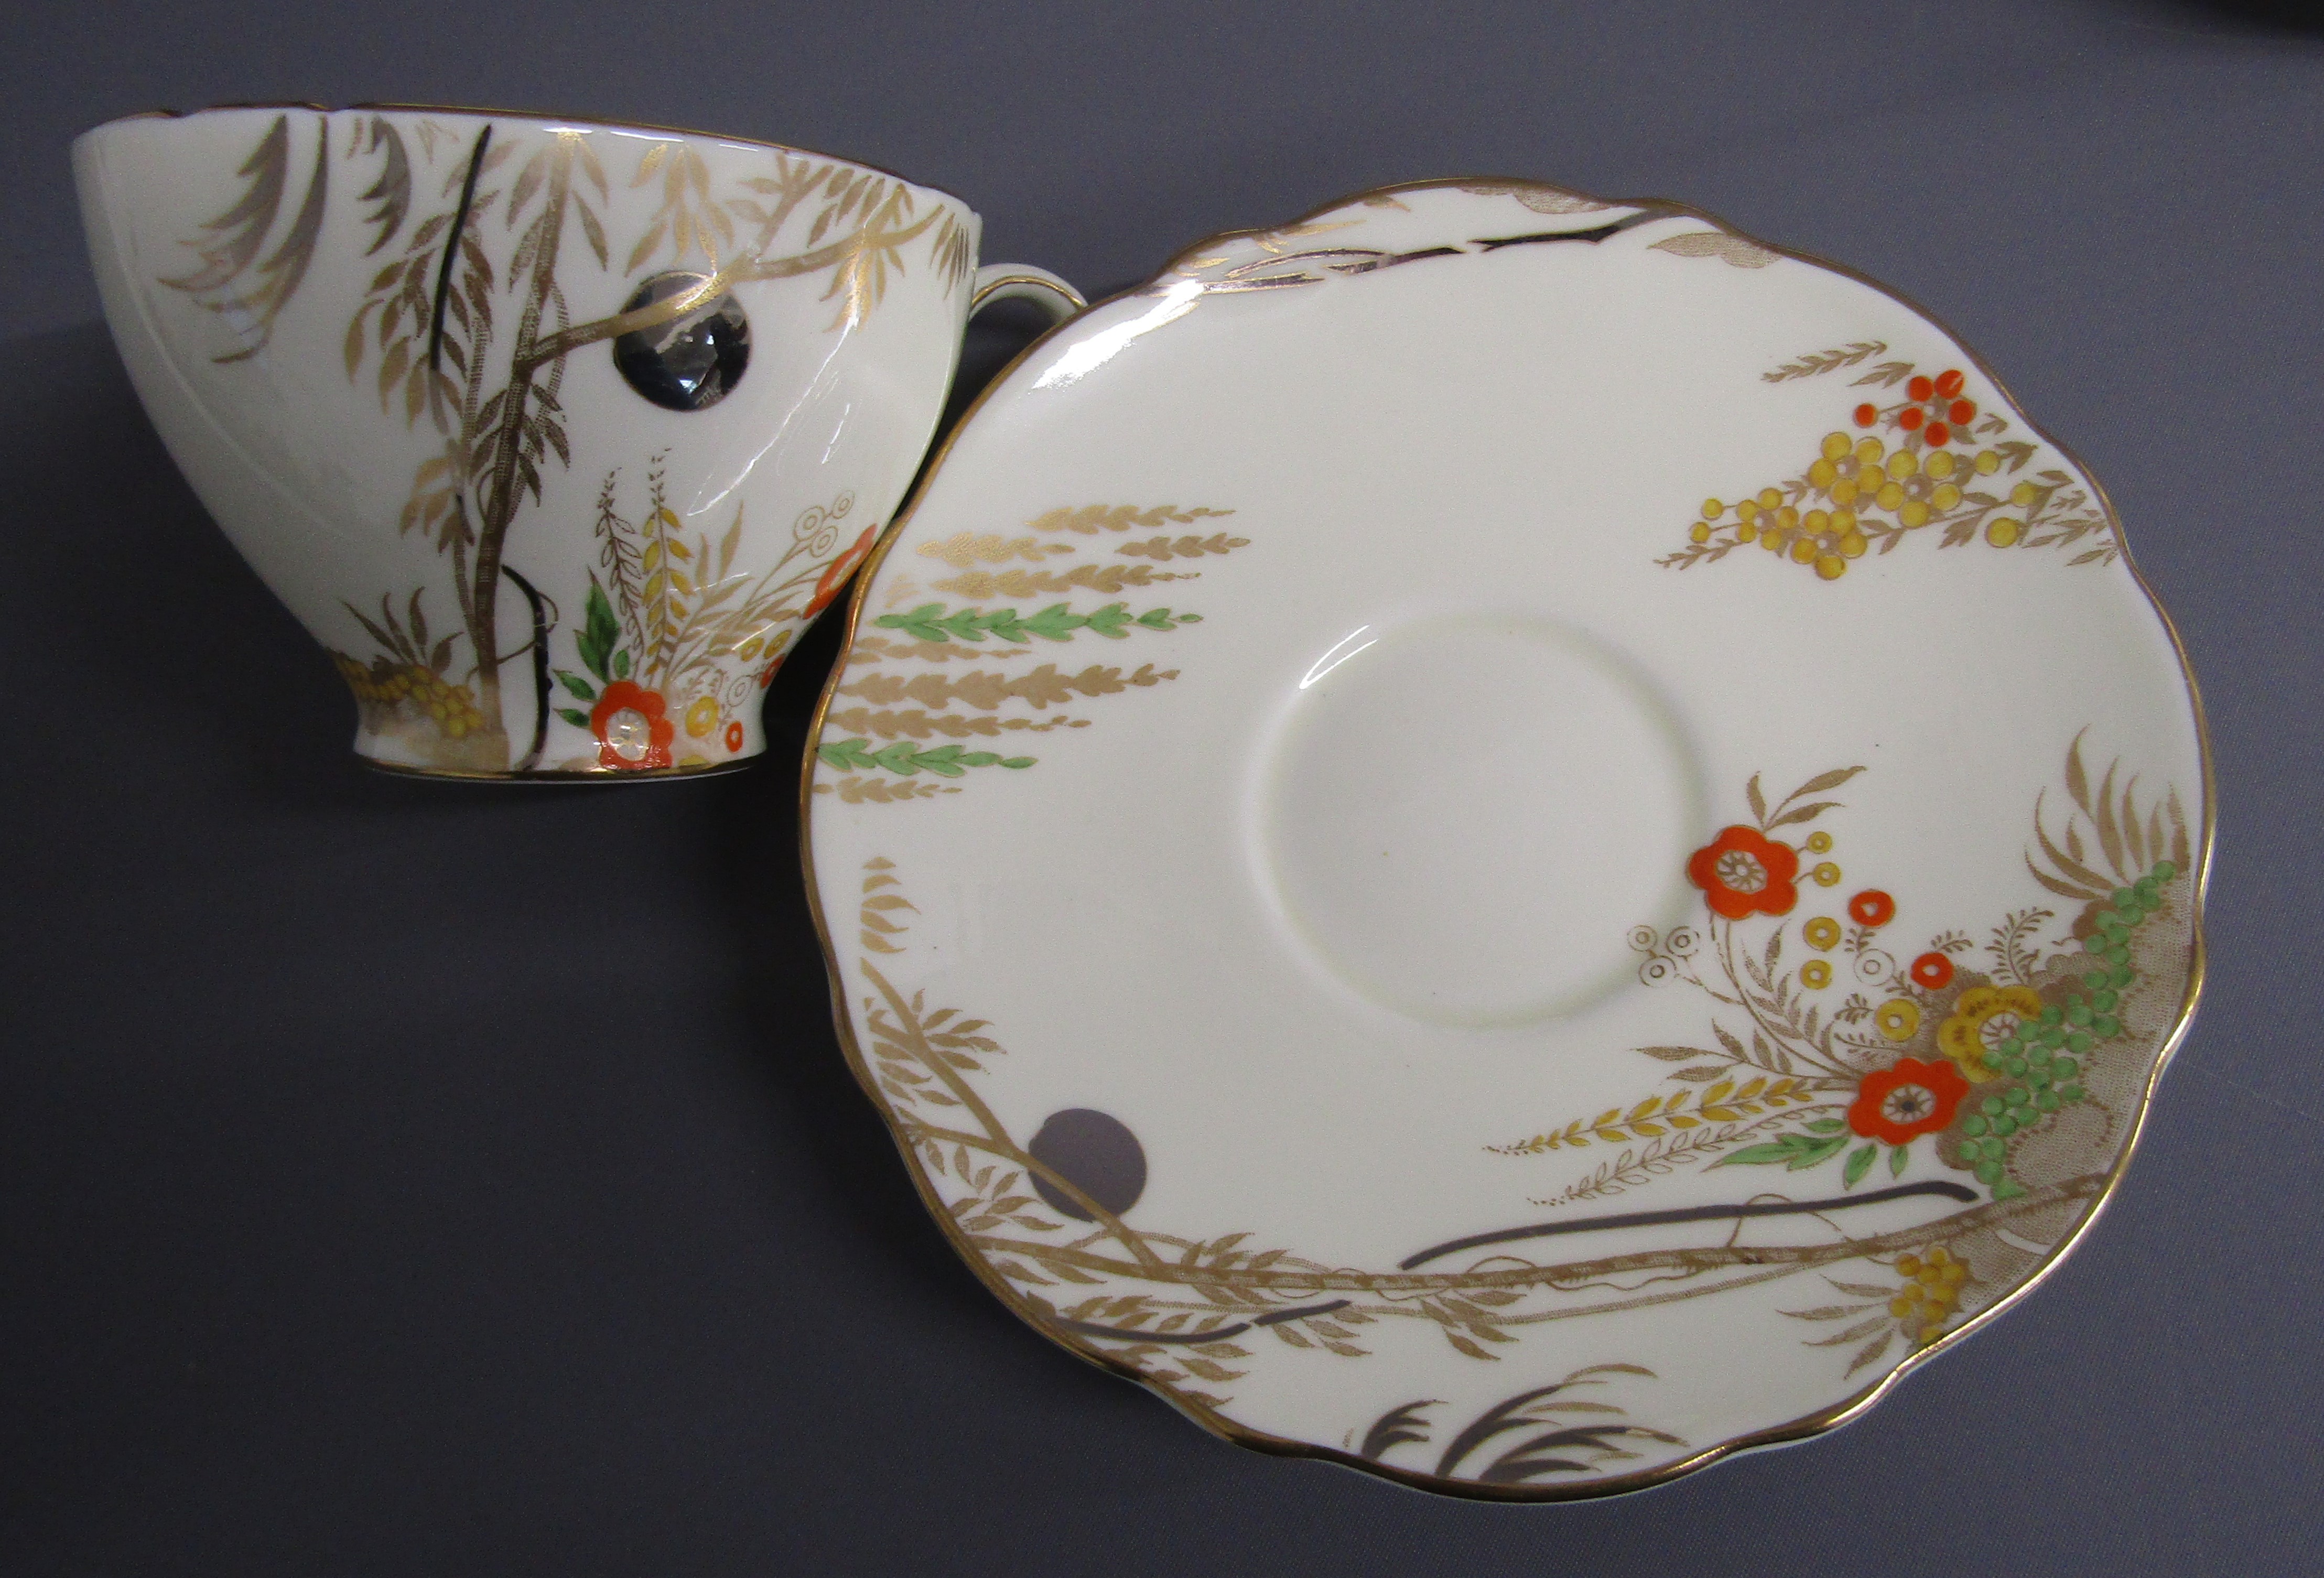 Cauldon Ware China, 3977 tea set includes 2 cake plates, 12 side plates, 12 cups and saucers, - Image 8 of 8